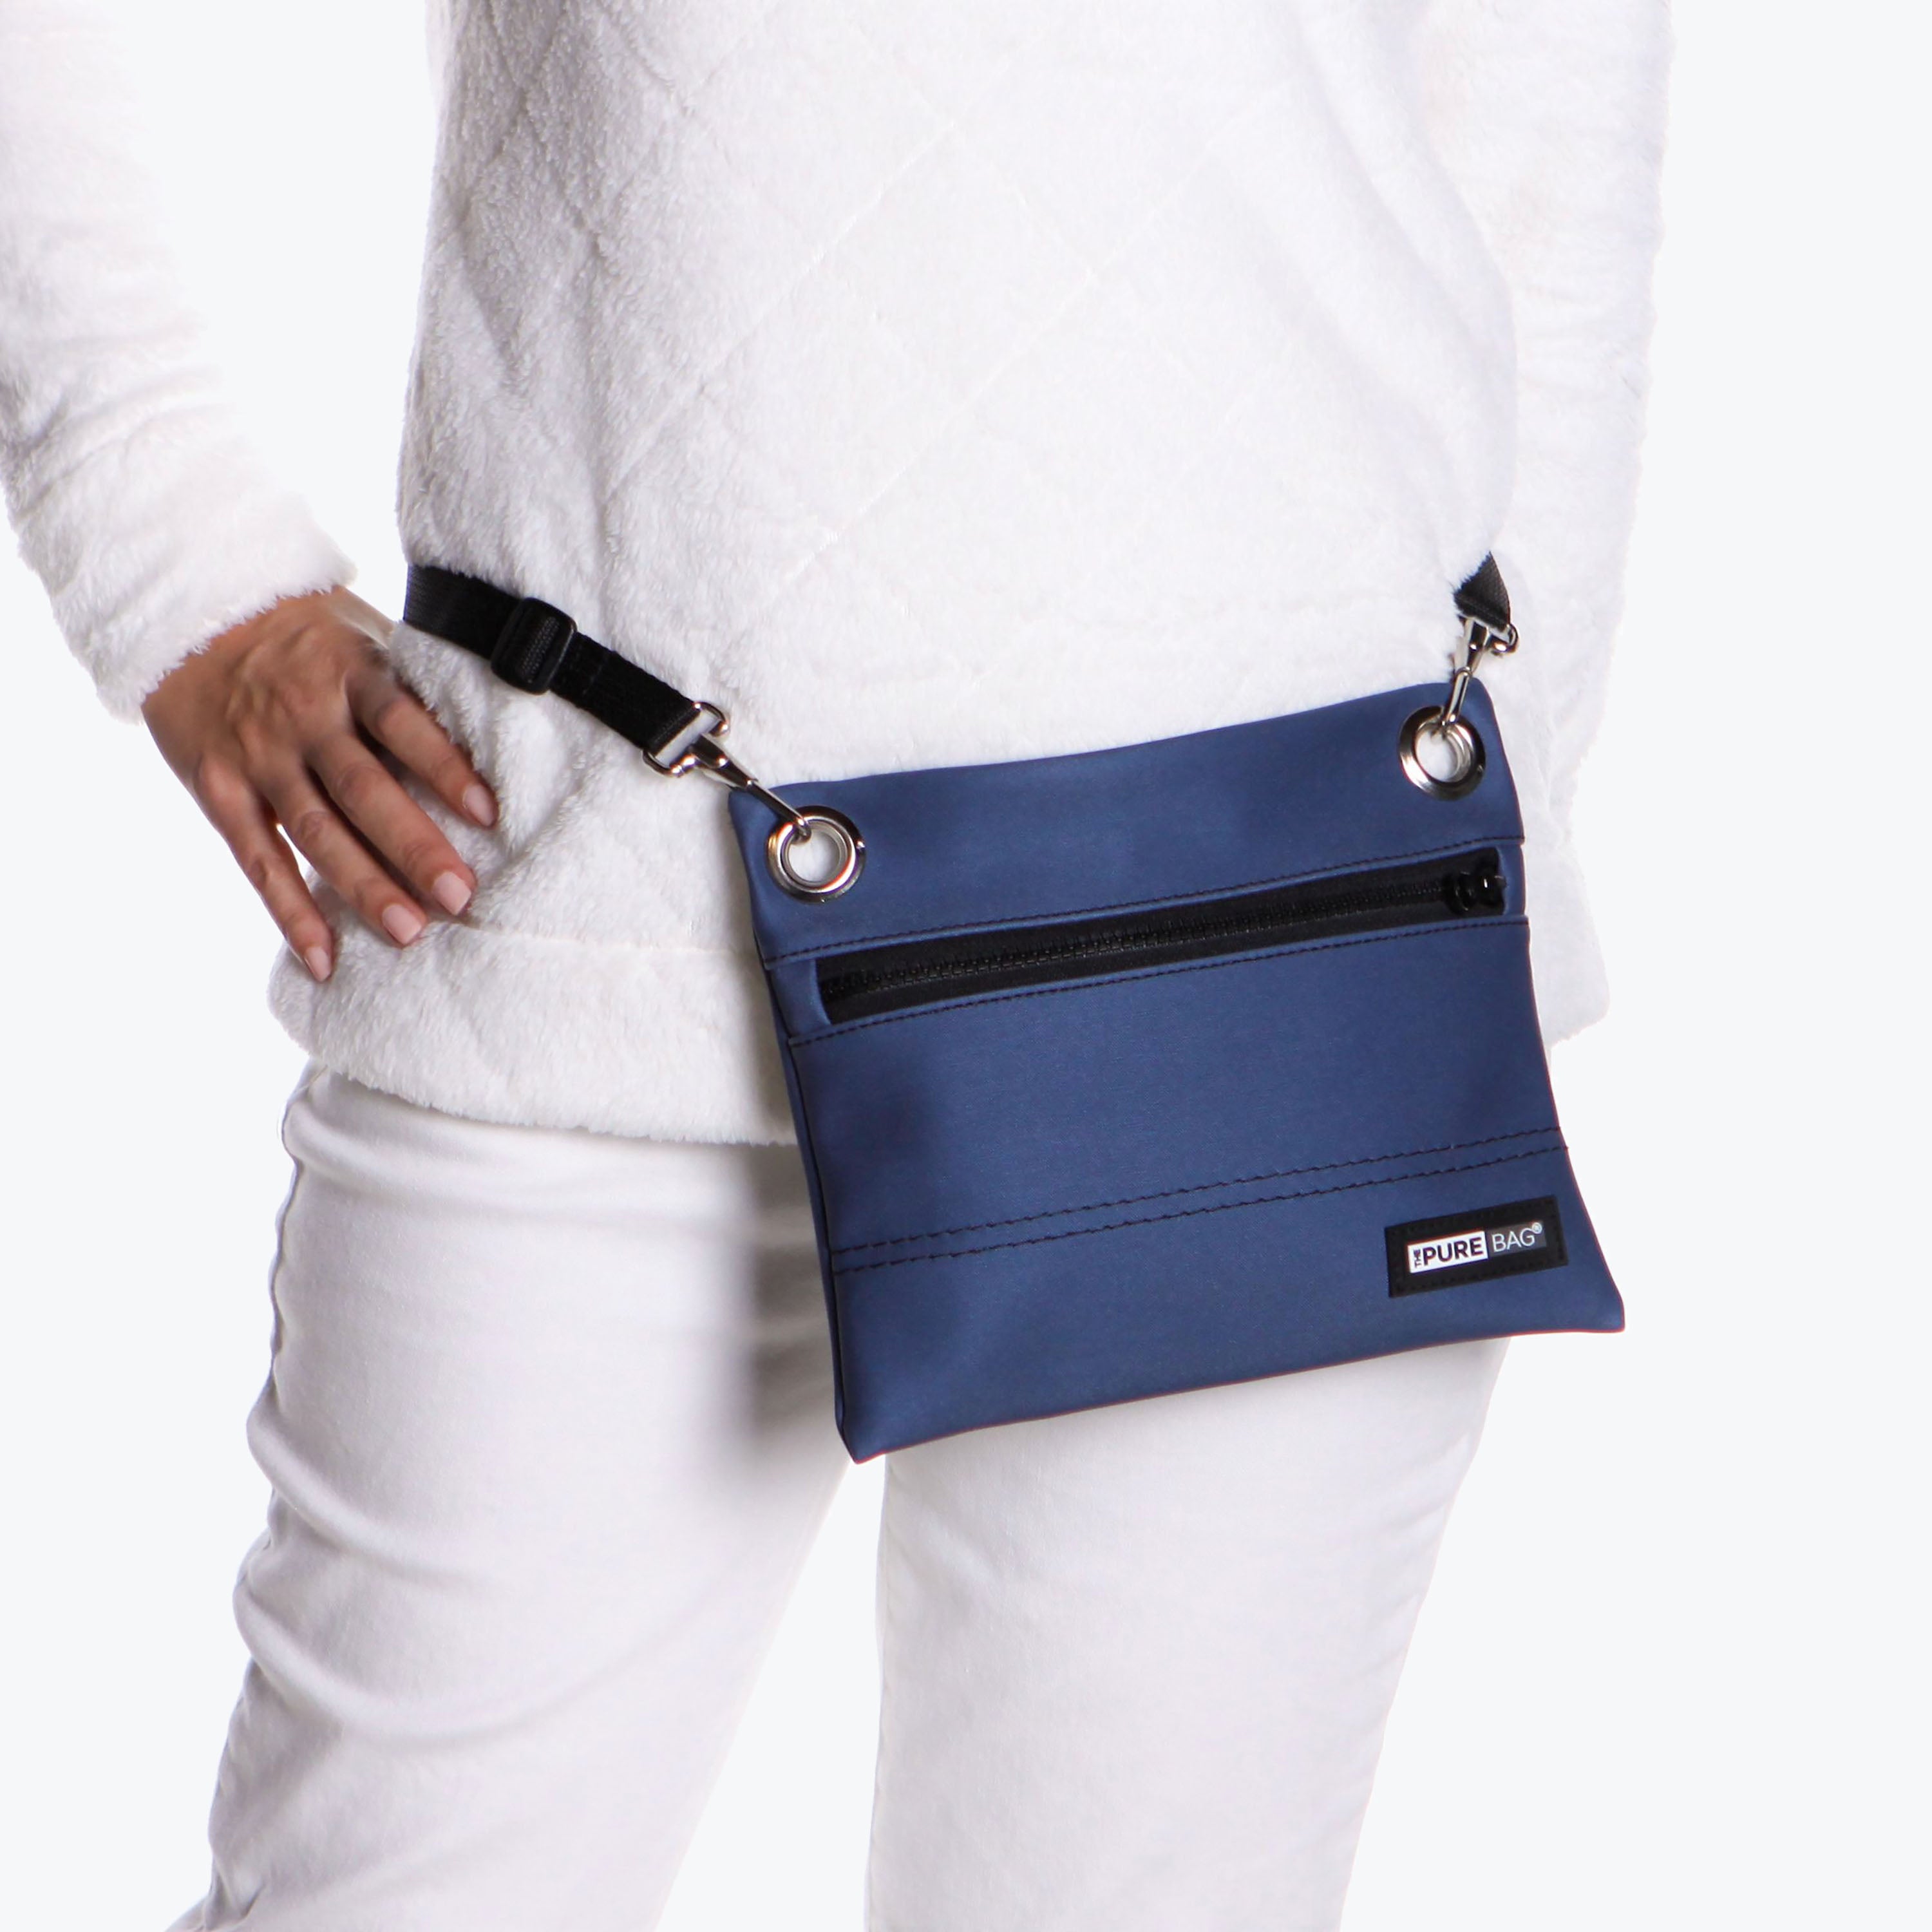 XB Printed Crossbody Cell Phone Bag Purse RFID for Women Shoulder